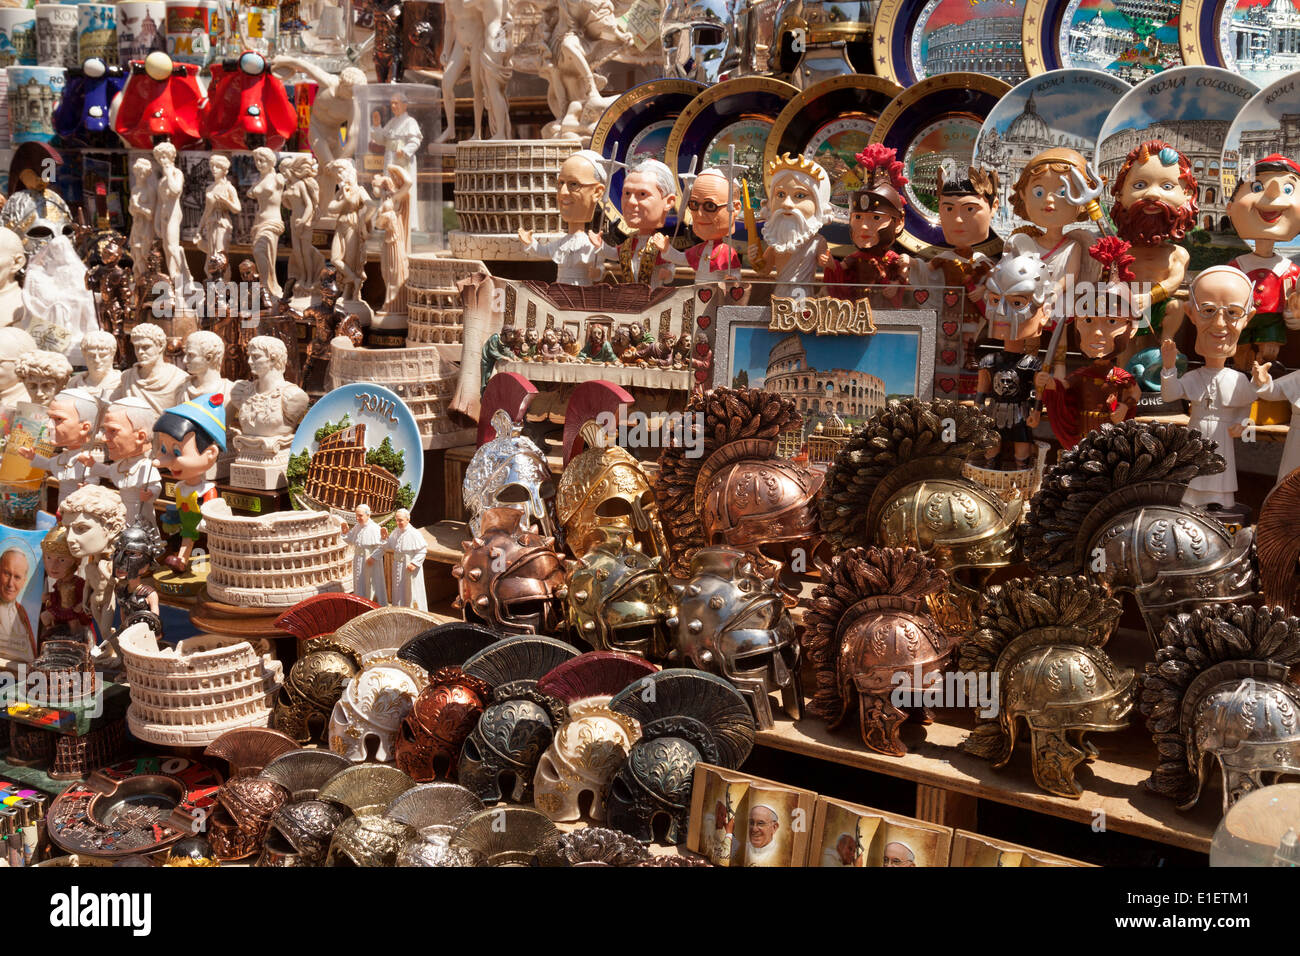 https://c8.alamy.com/comp/E1ETM1/rome-souvenirs-and-gifts-on-a-street-stall-rome-italy-europe-E1ETM1.jpg